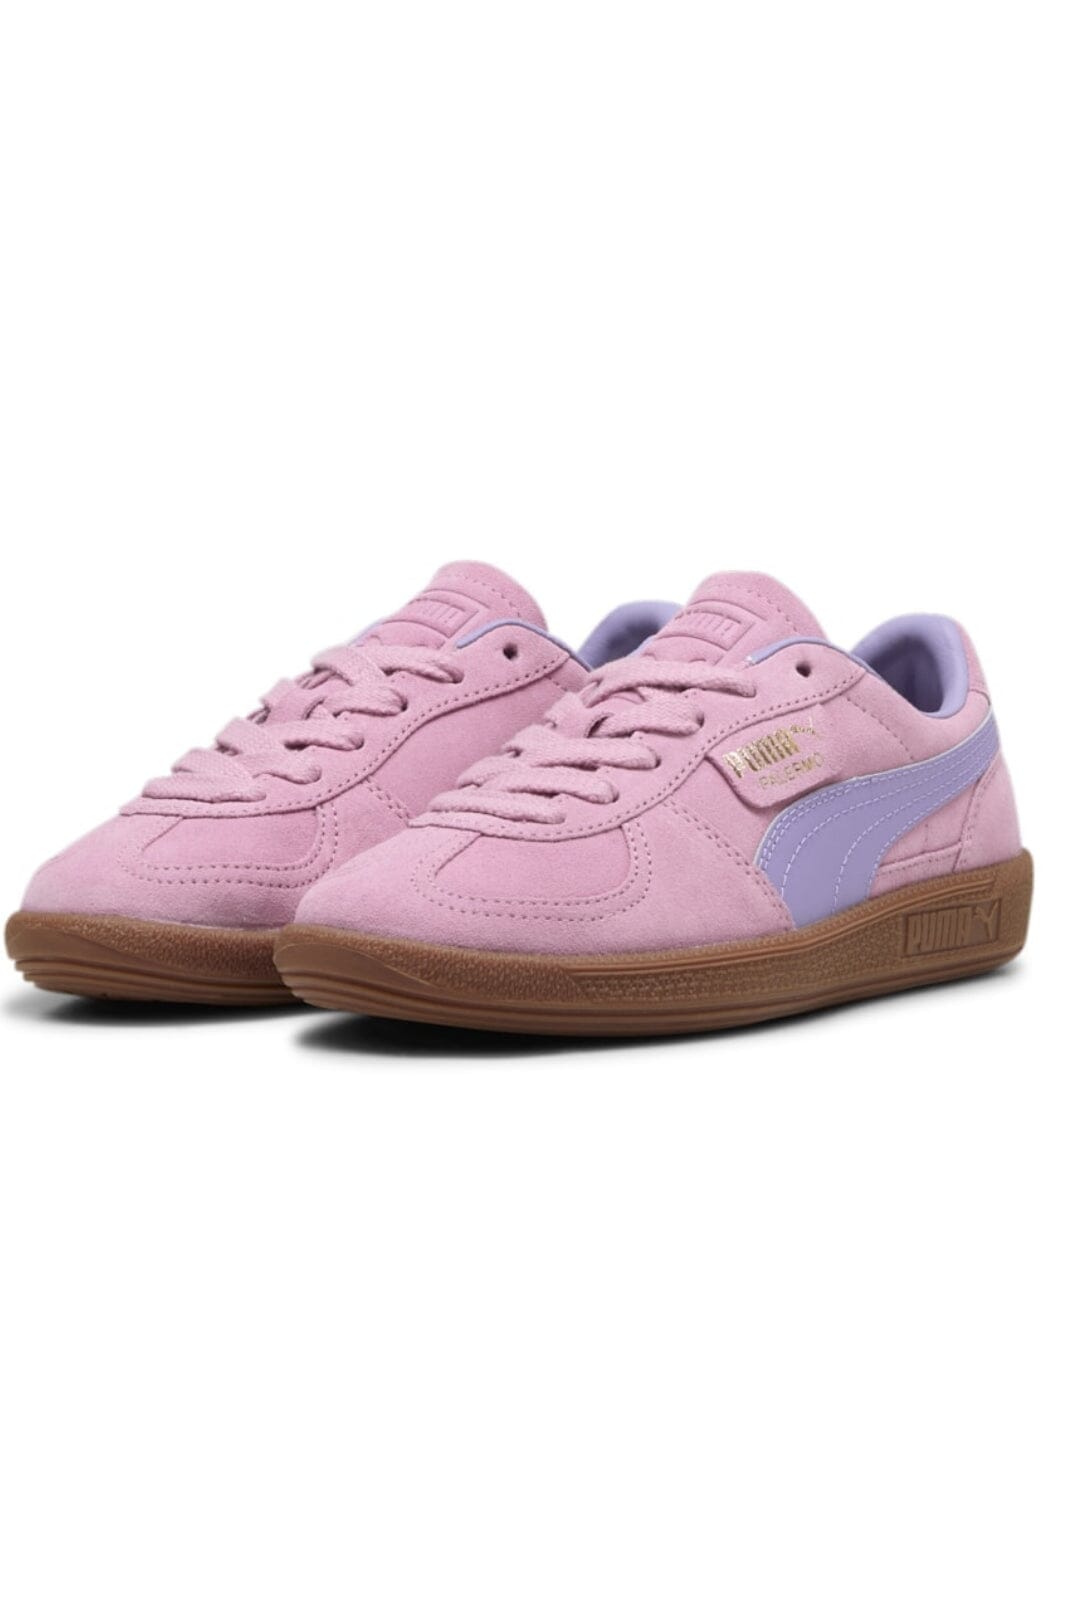 Puma - Palermo Jr - Pink 12 Sneakers 